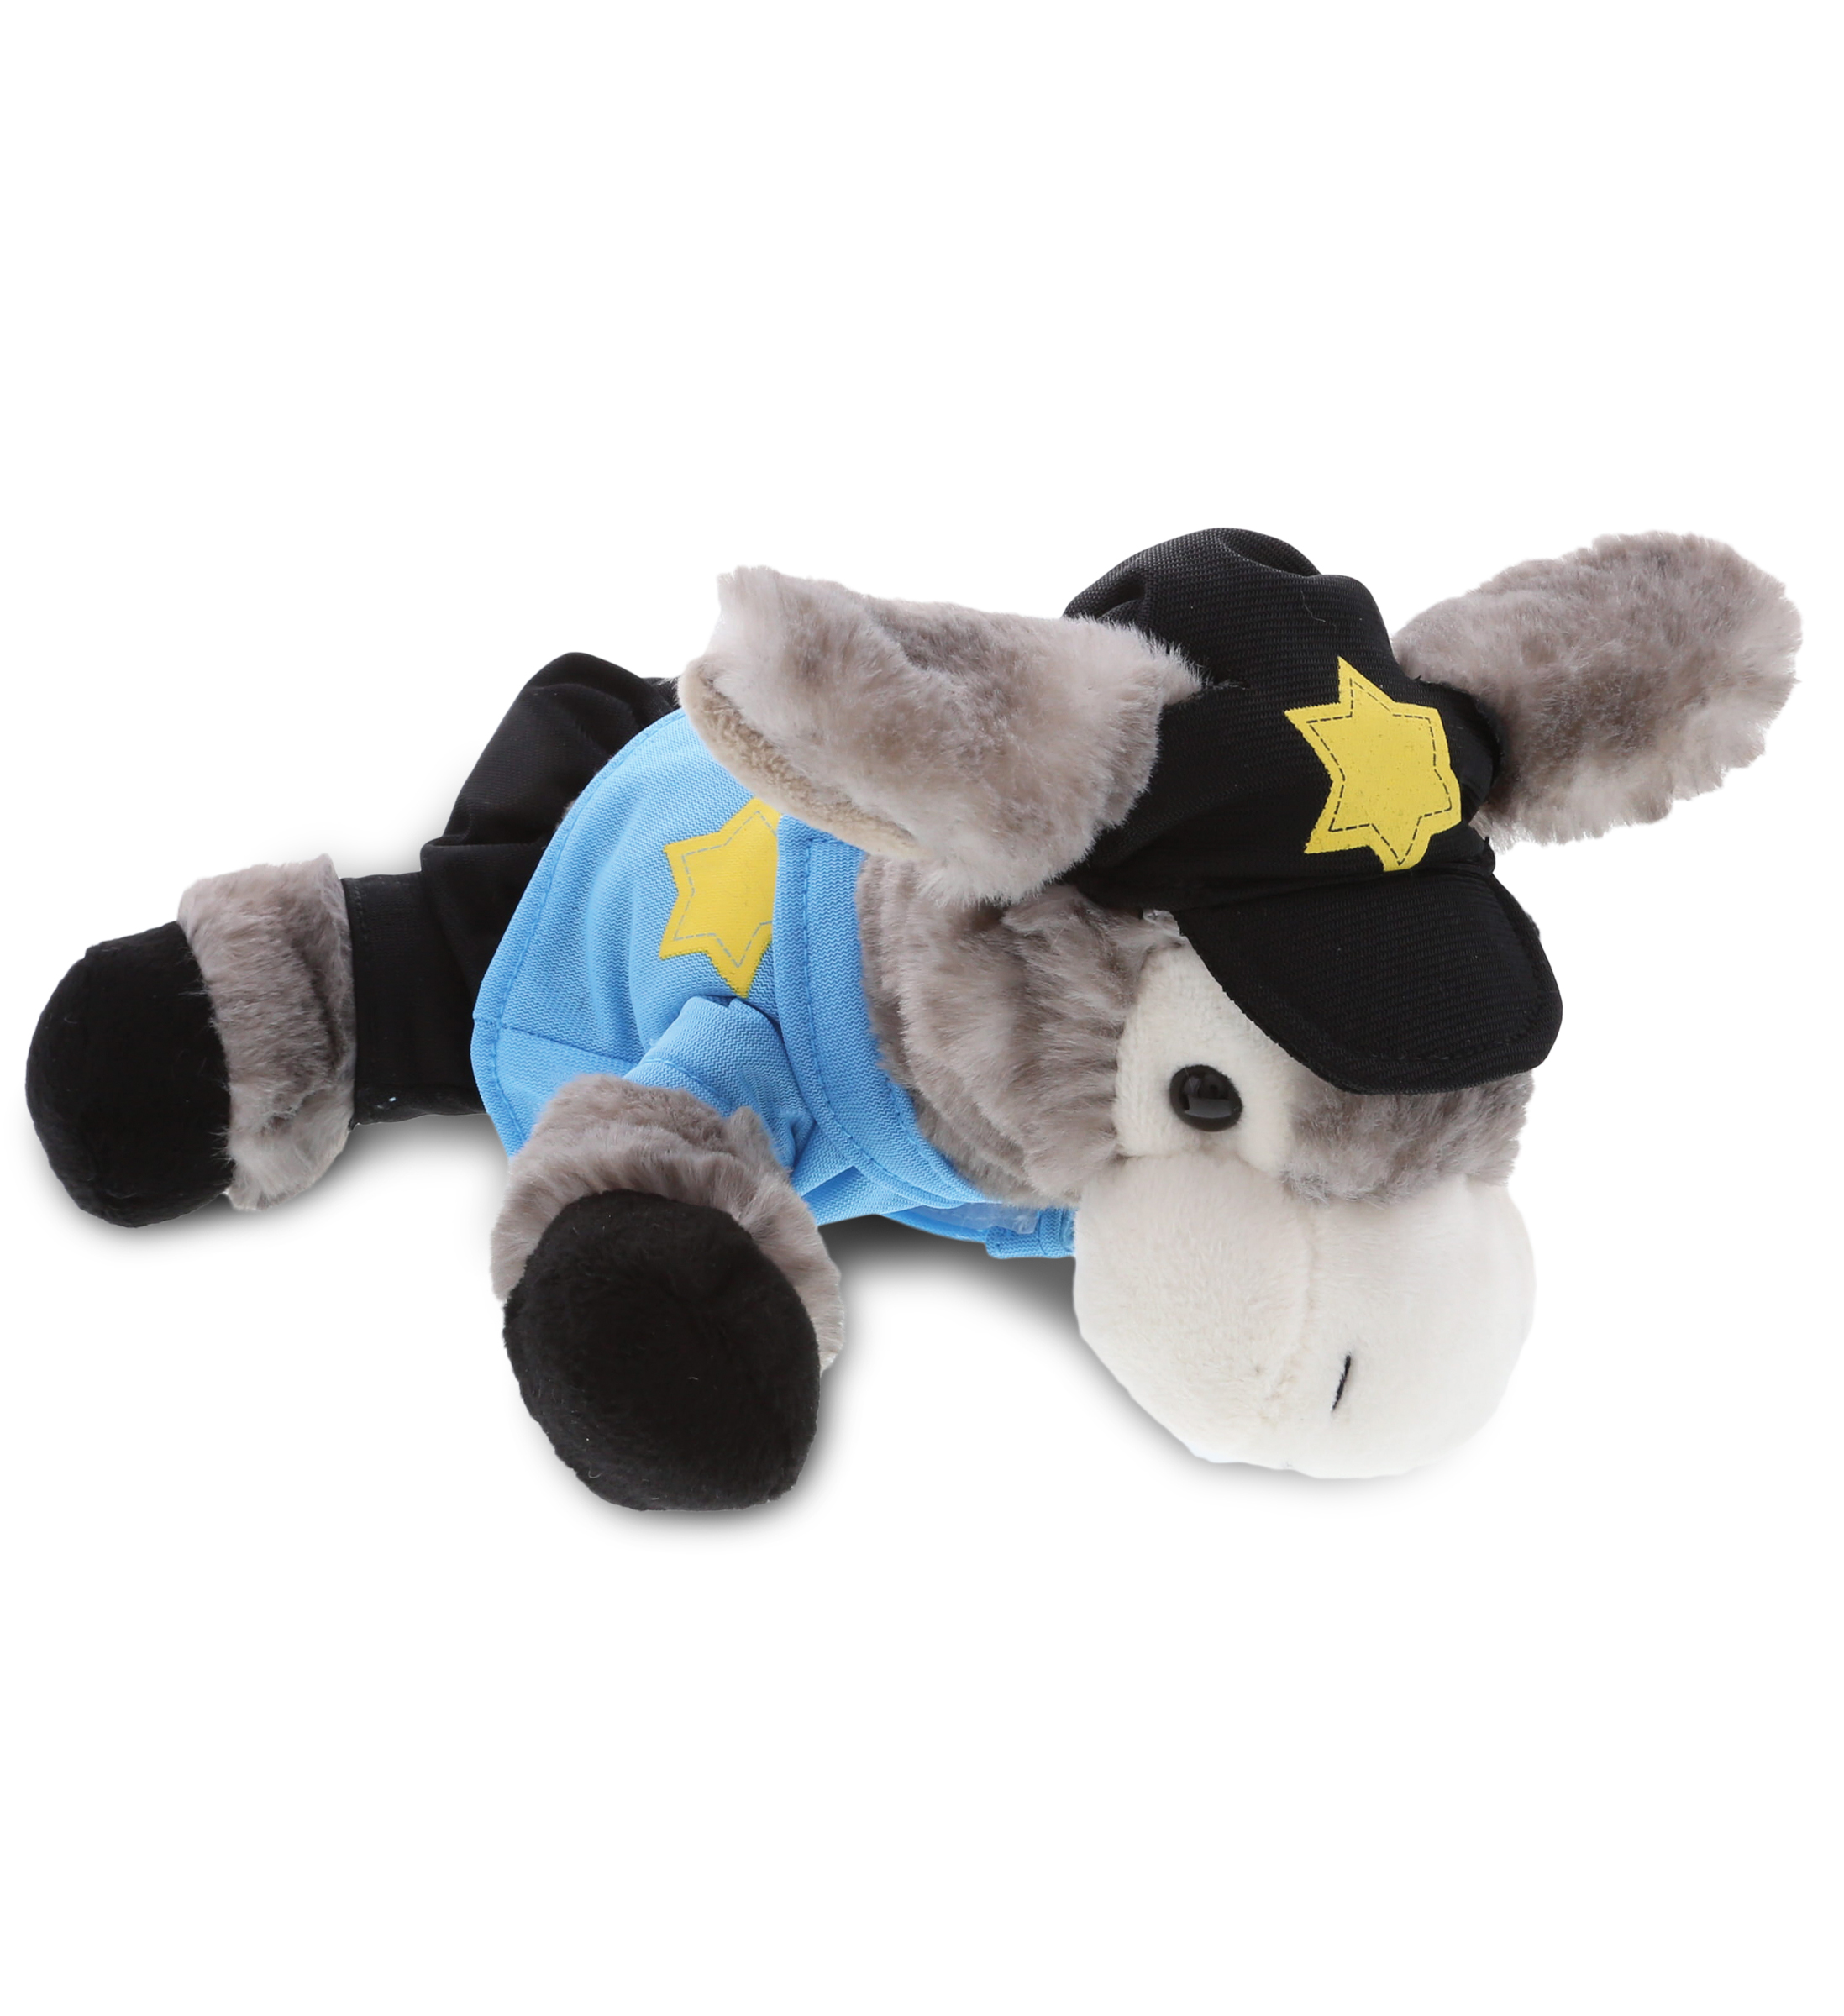 DolliBu Lying Grey Donkey Police Officer Plush Toy – Super Soft Donkey Cop Stuffed  Animal Dress Up with Cute Cop Uniform & Cap Outfit – 9″ Inches - DolliBu